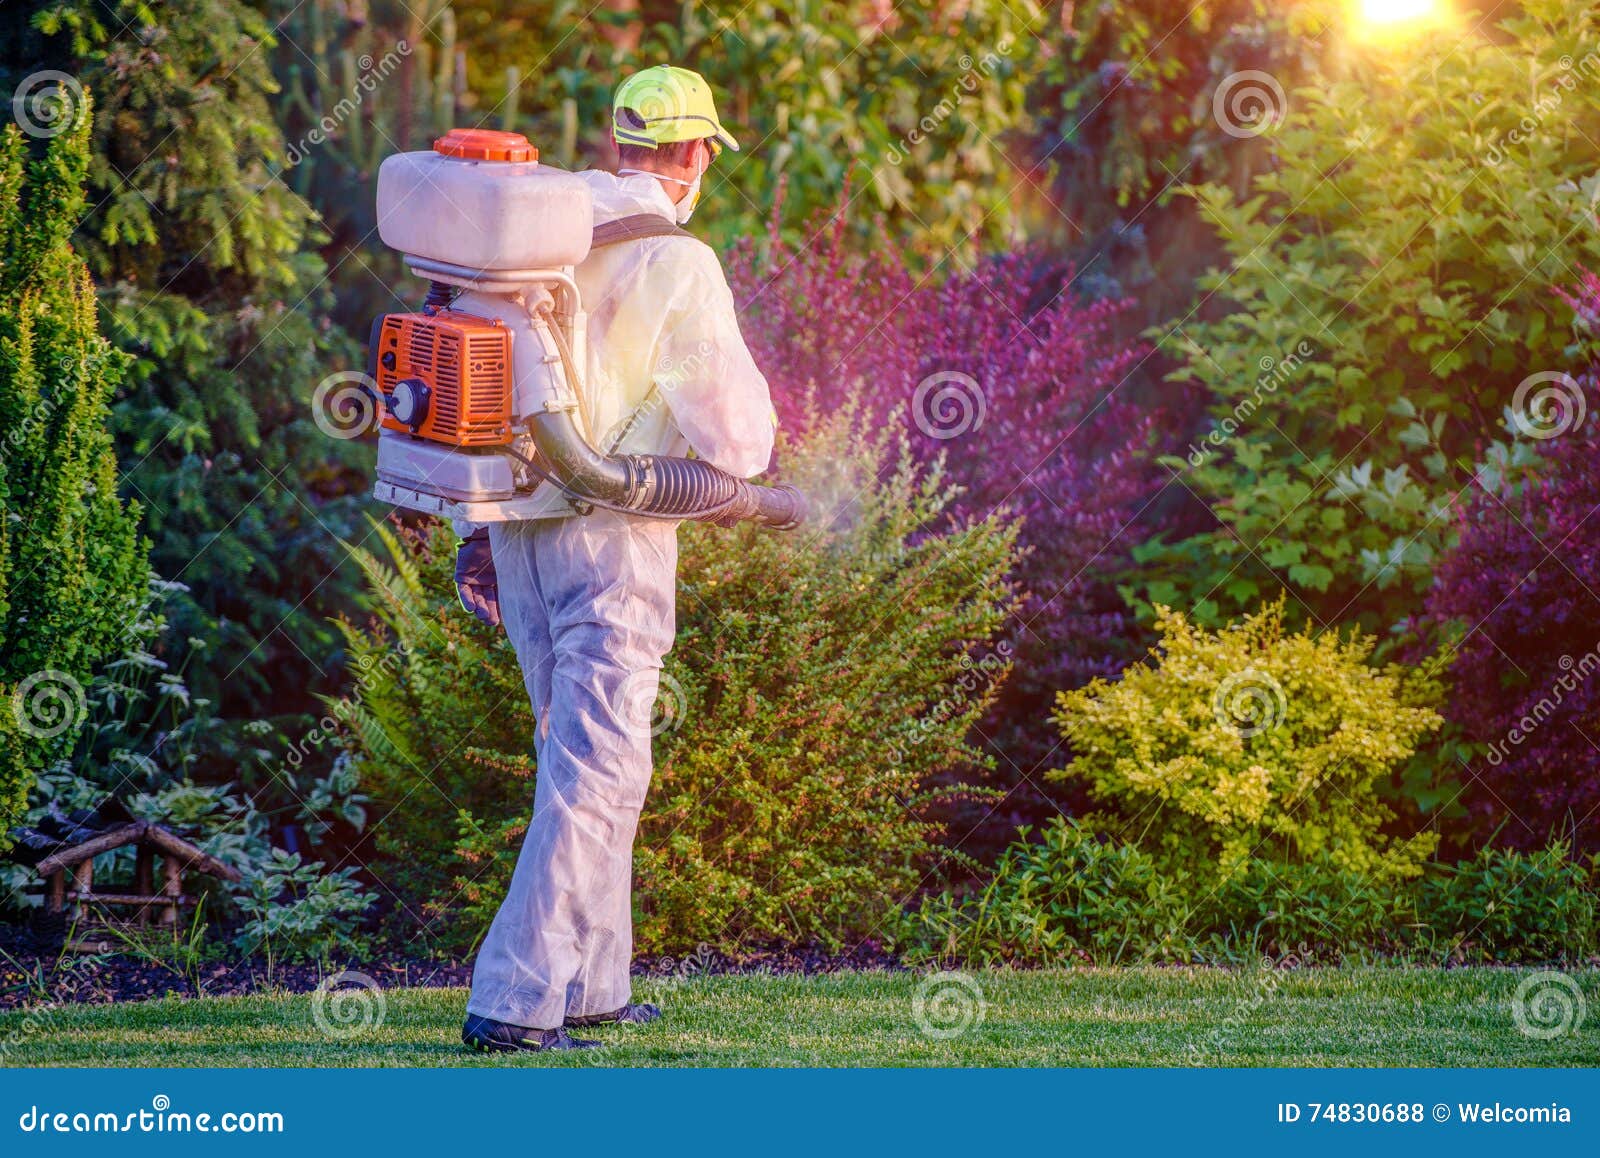 pest control garden spraying